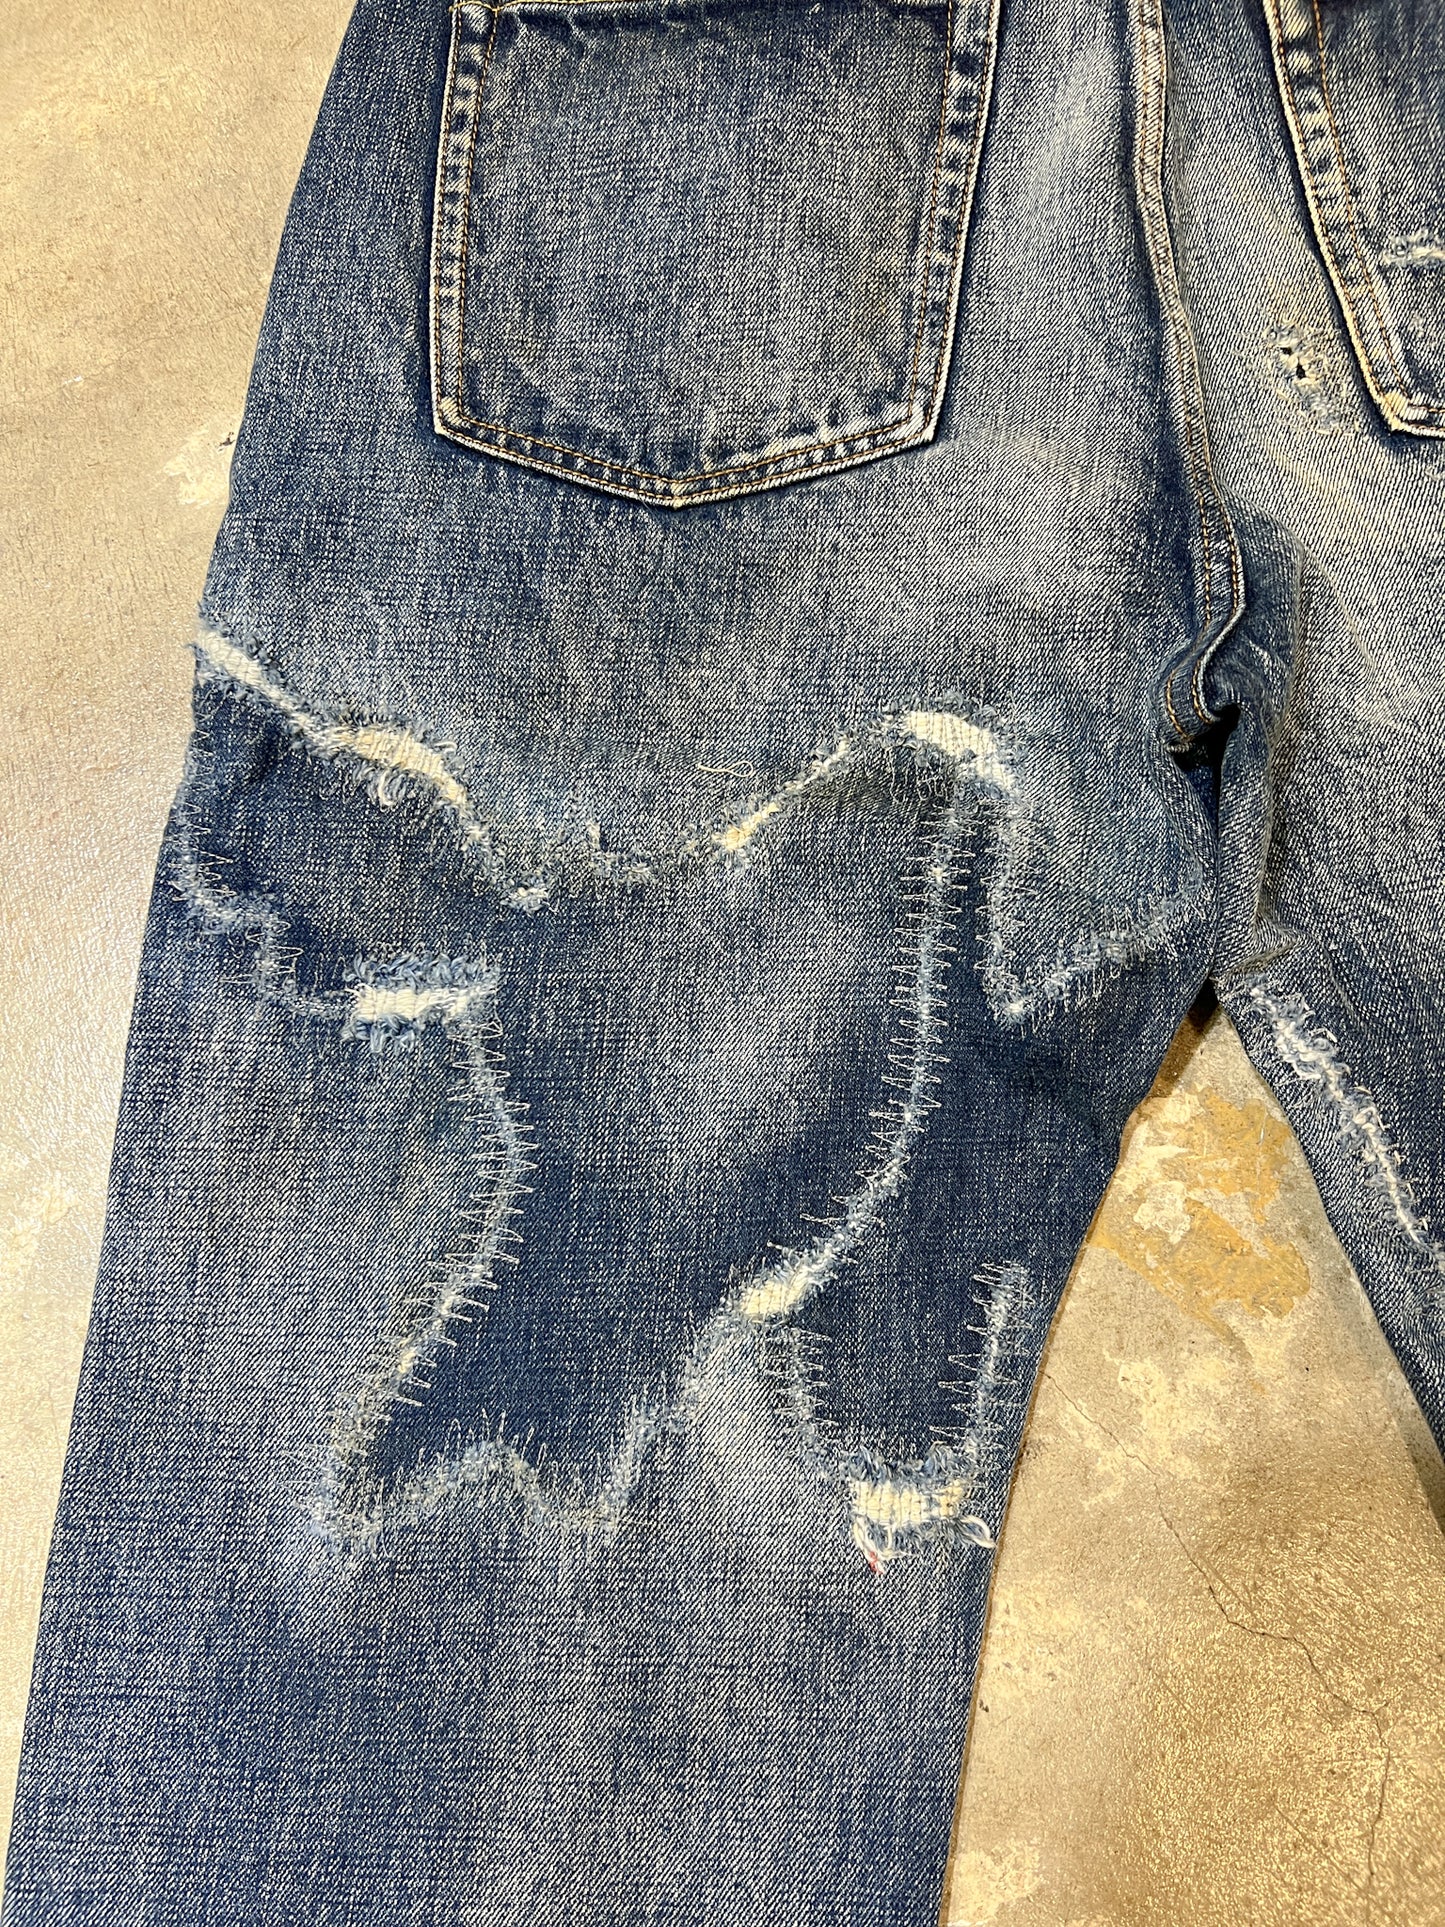 F04 Penetration Fading Damaged Jeans